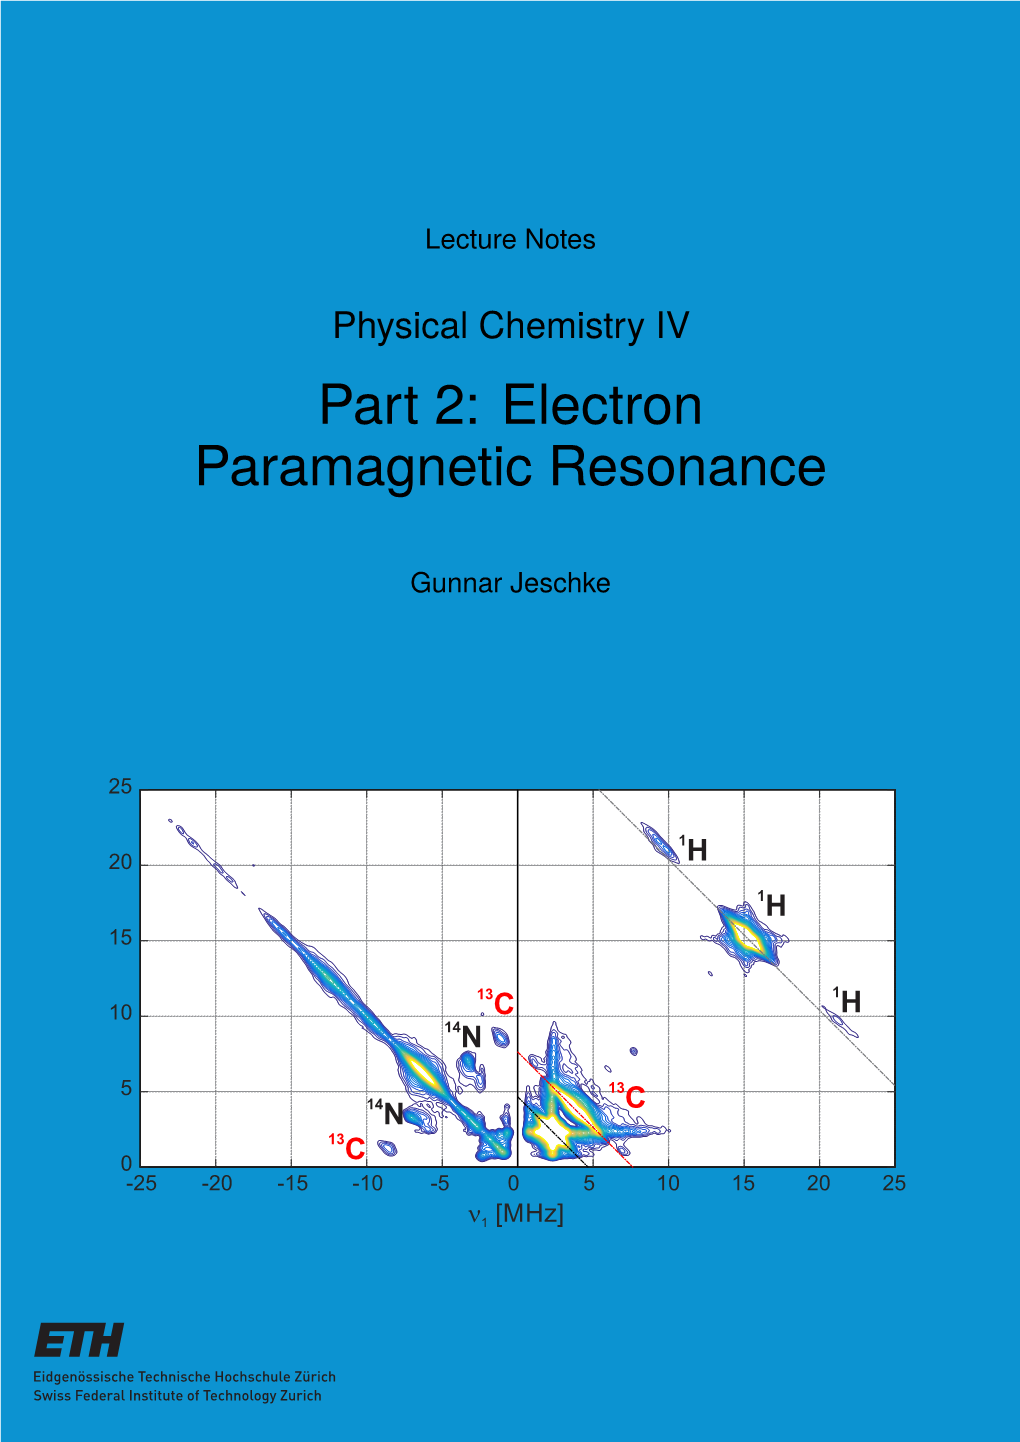 Part 2: Electron Paramagnetic Resonance